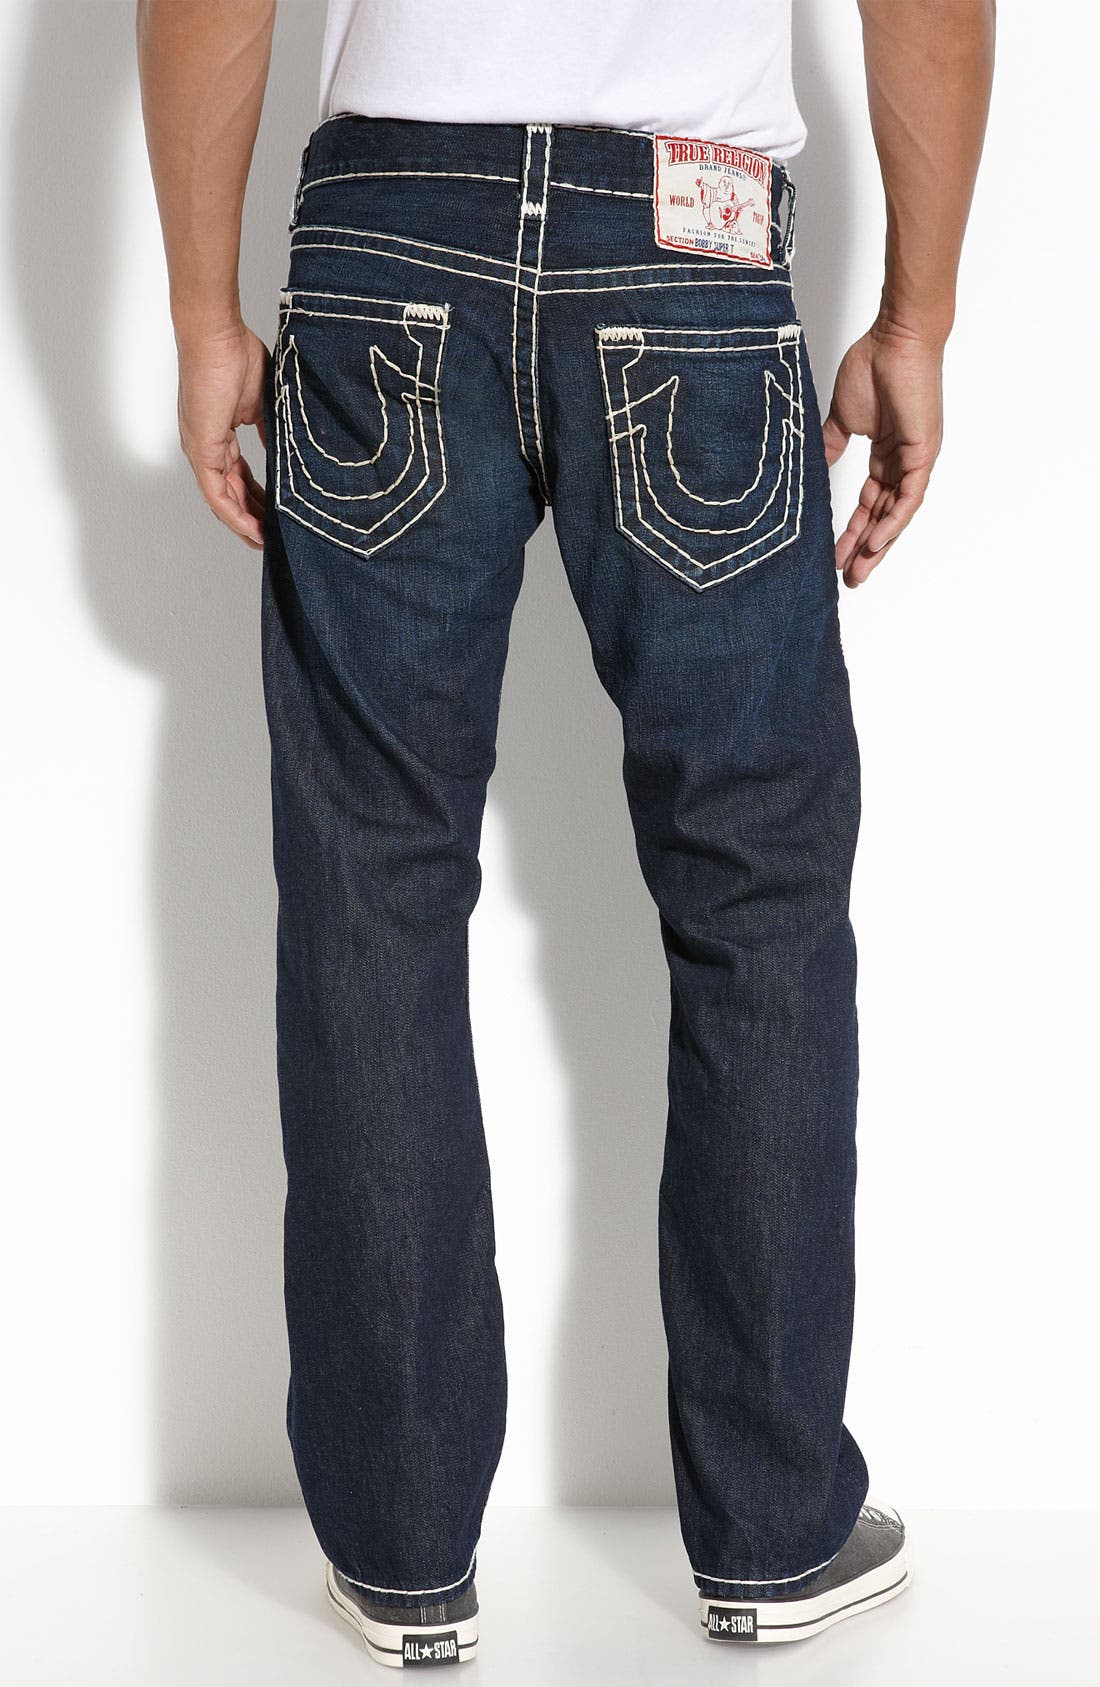 bobby super t true religion jeans